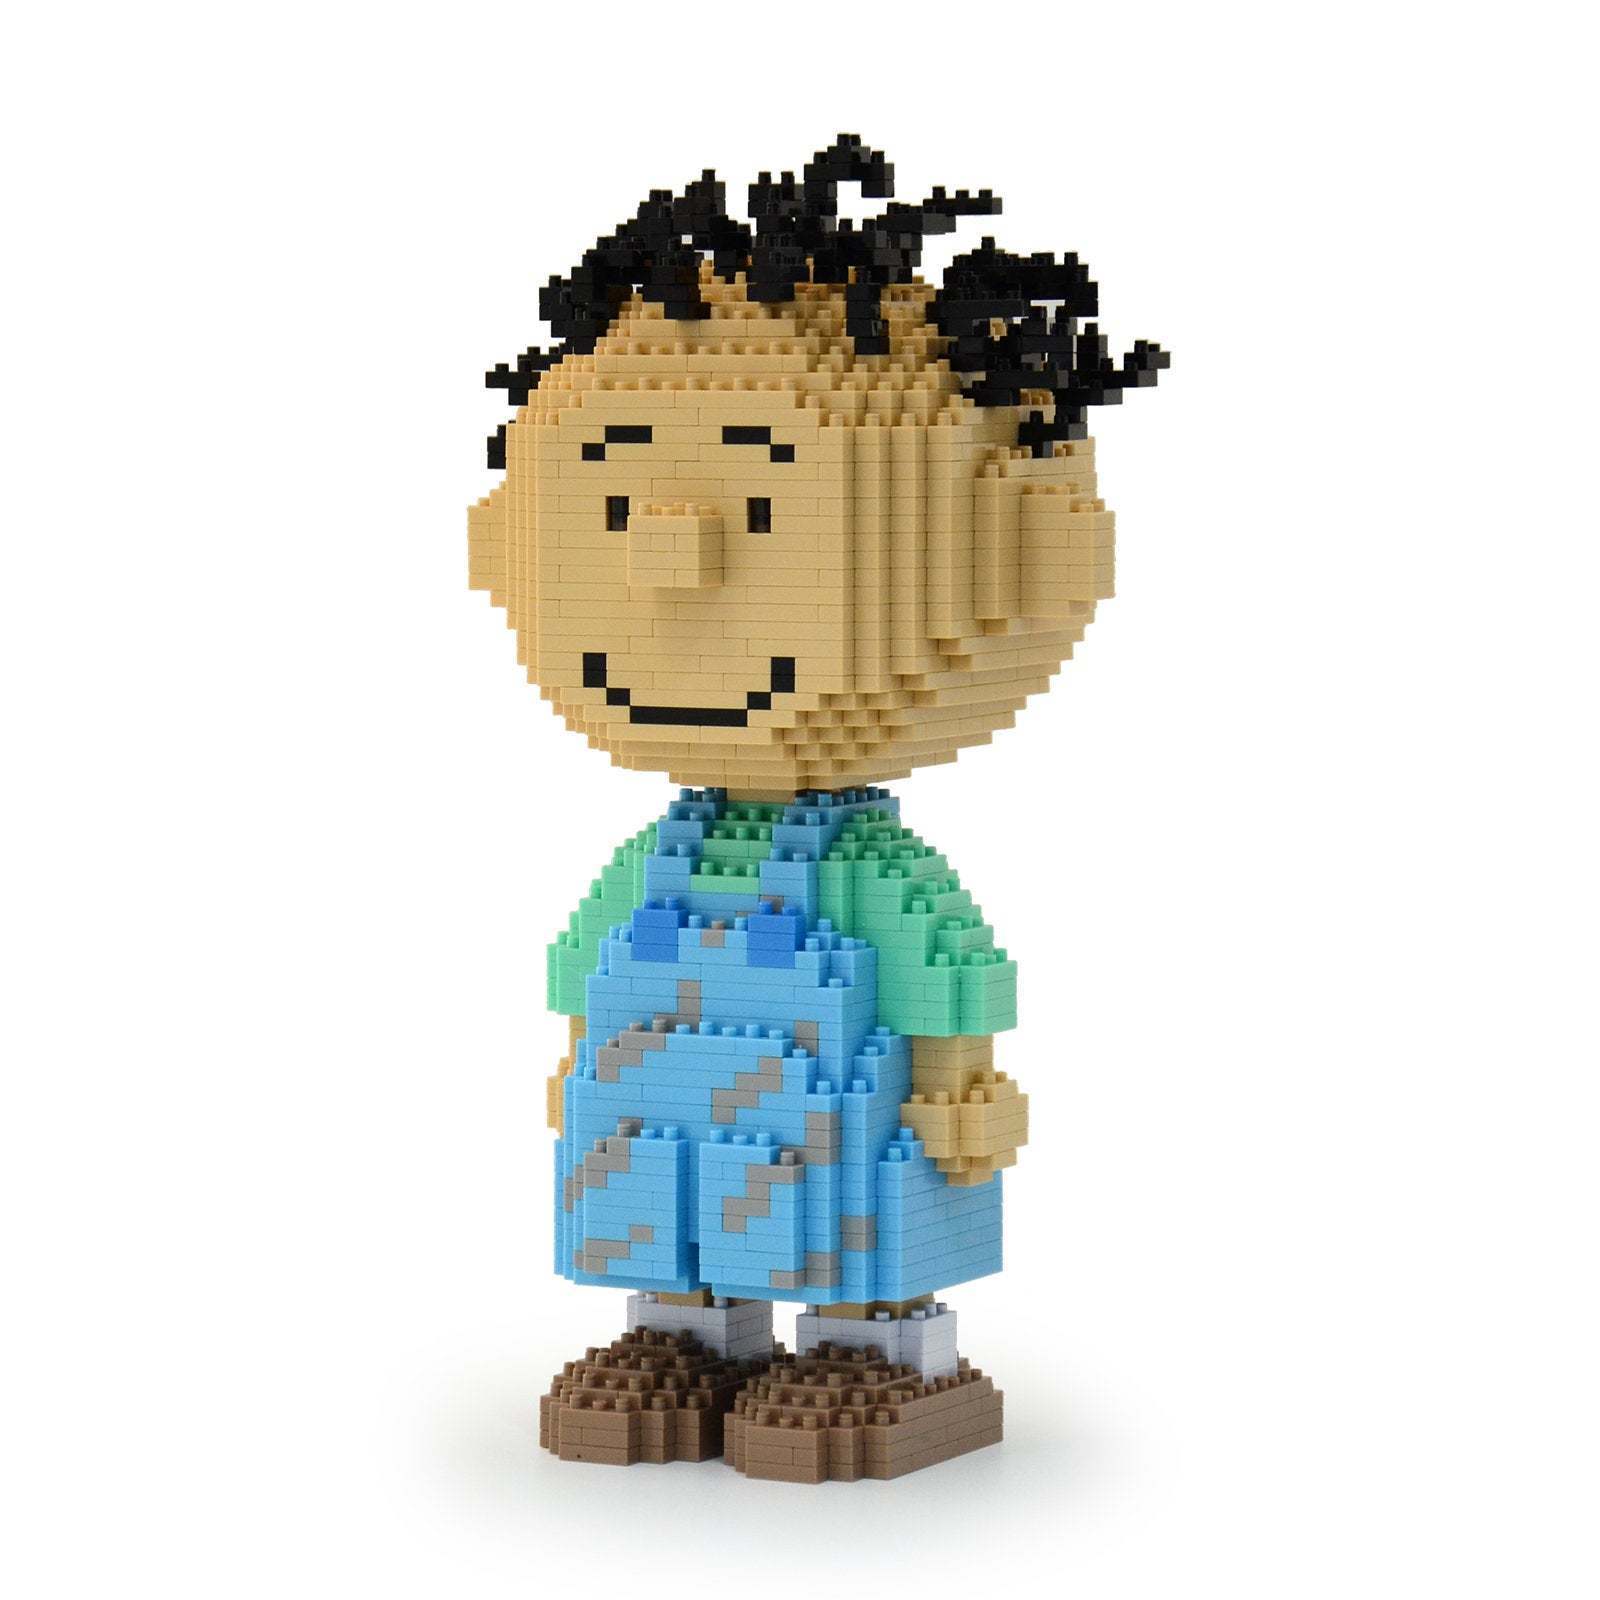 Pig-Pen (Peanuts) Brick Sculpture (JEKCA Lego Brick) DIY Kit - $79.00